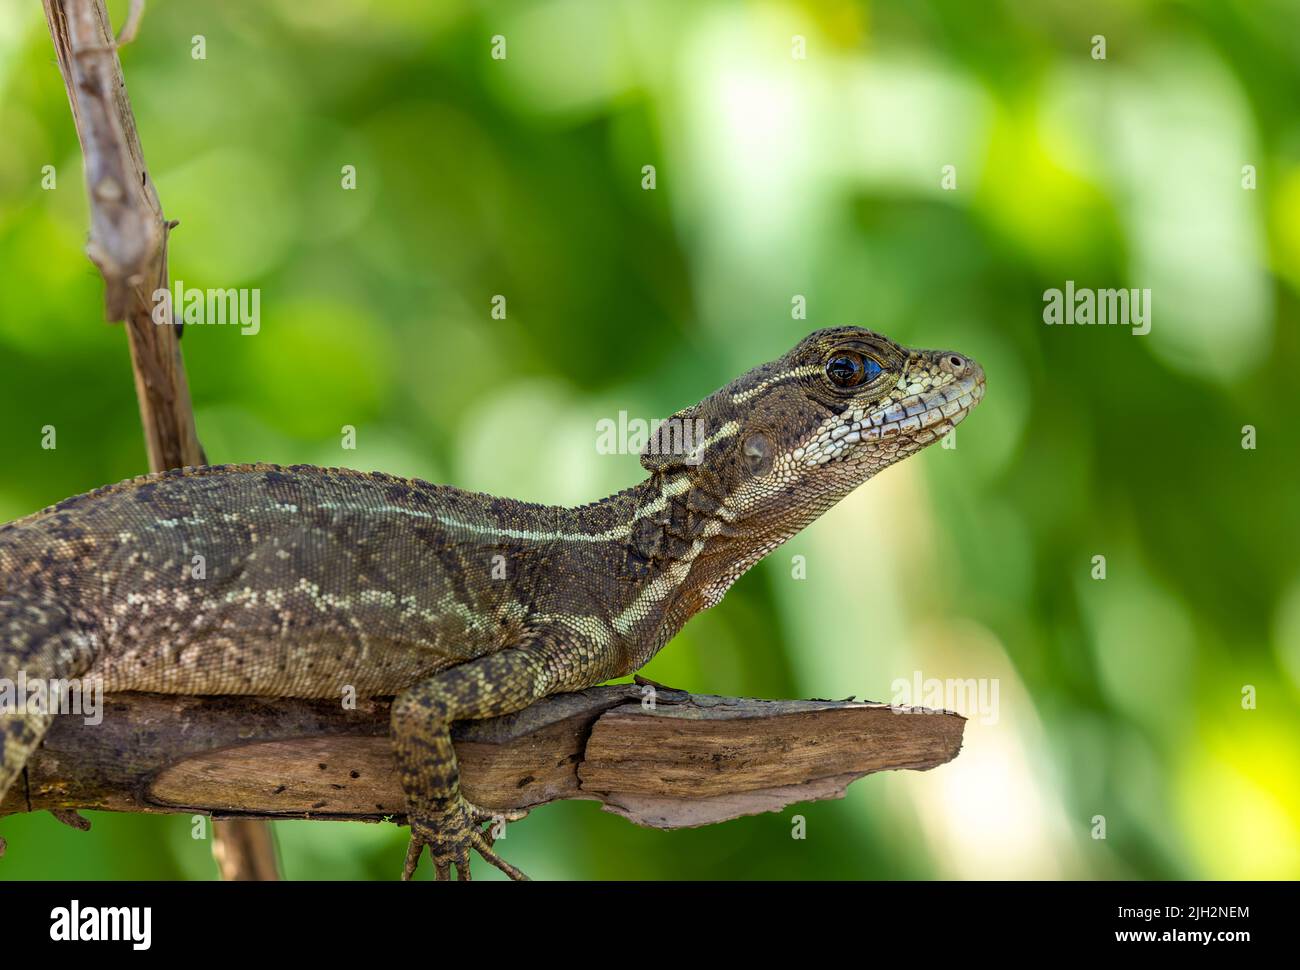 Lizard on branch in Costa Rica Stock Photo